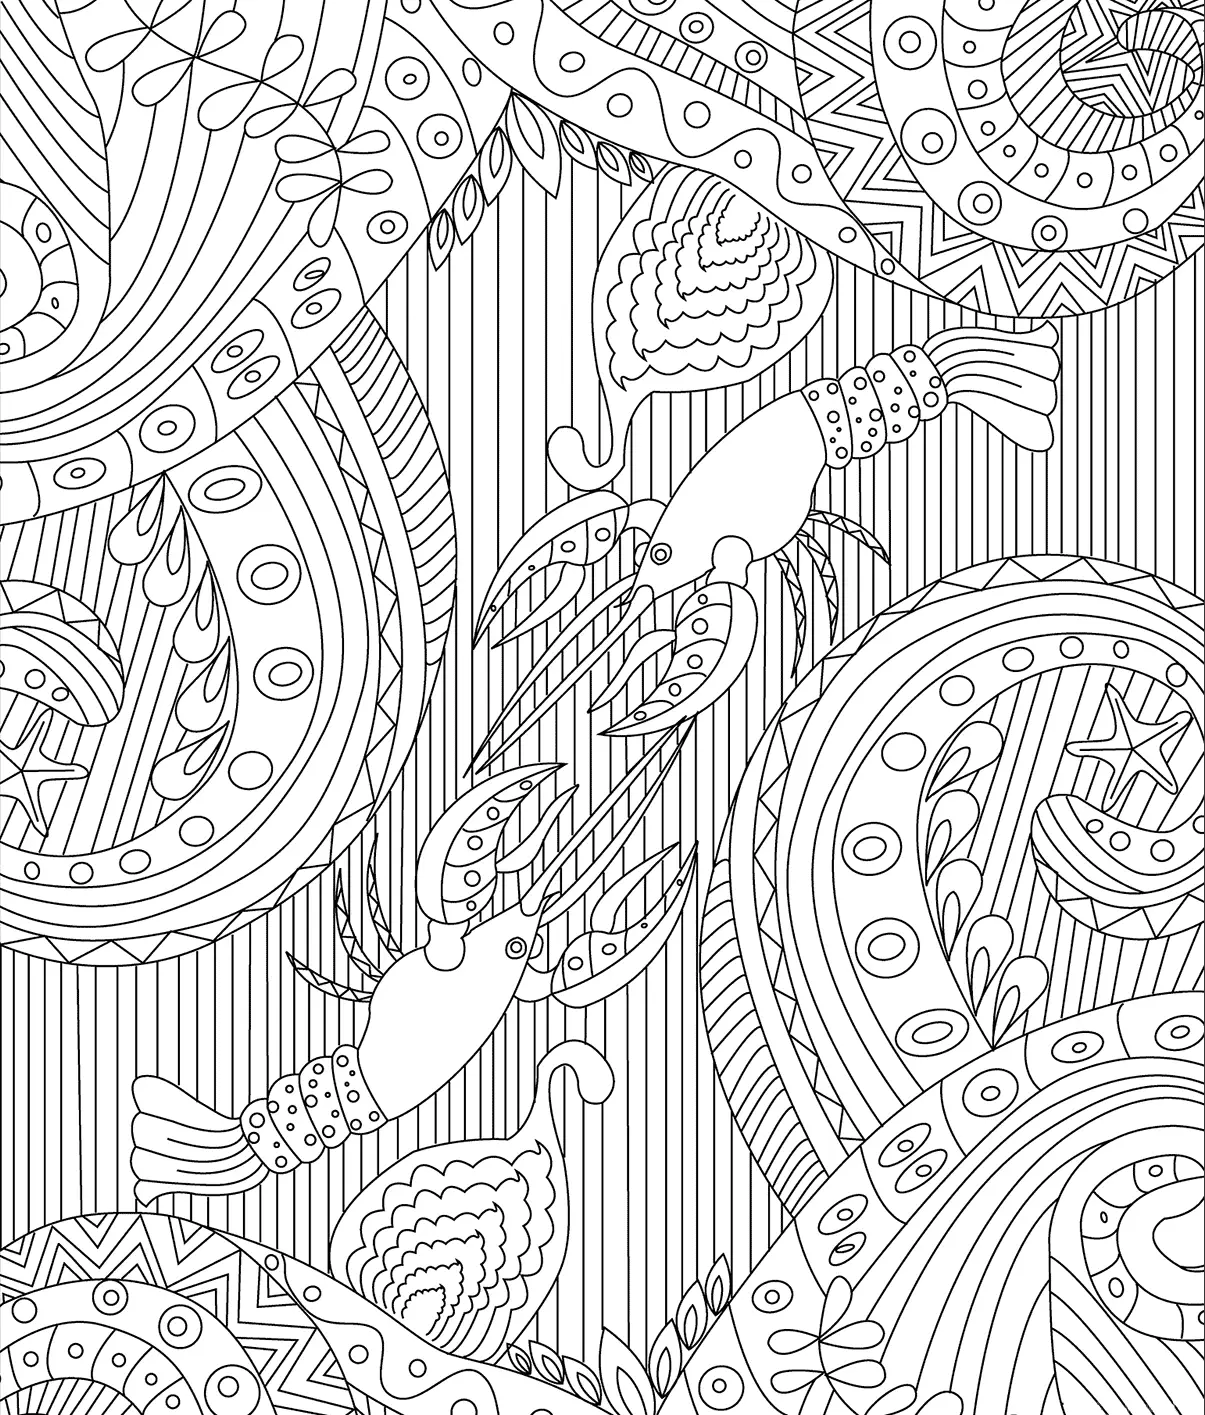 Crawfish Zentangle Beautiful Mandala Coloring Pages for Kids Adults Boredom Art Activities Line Art